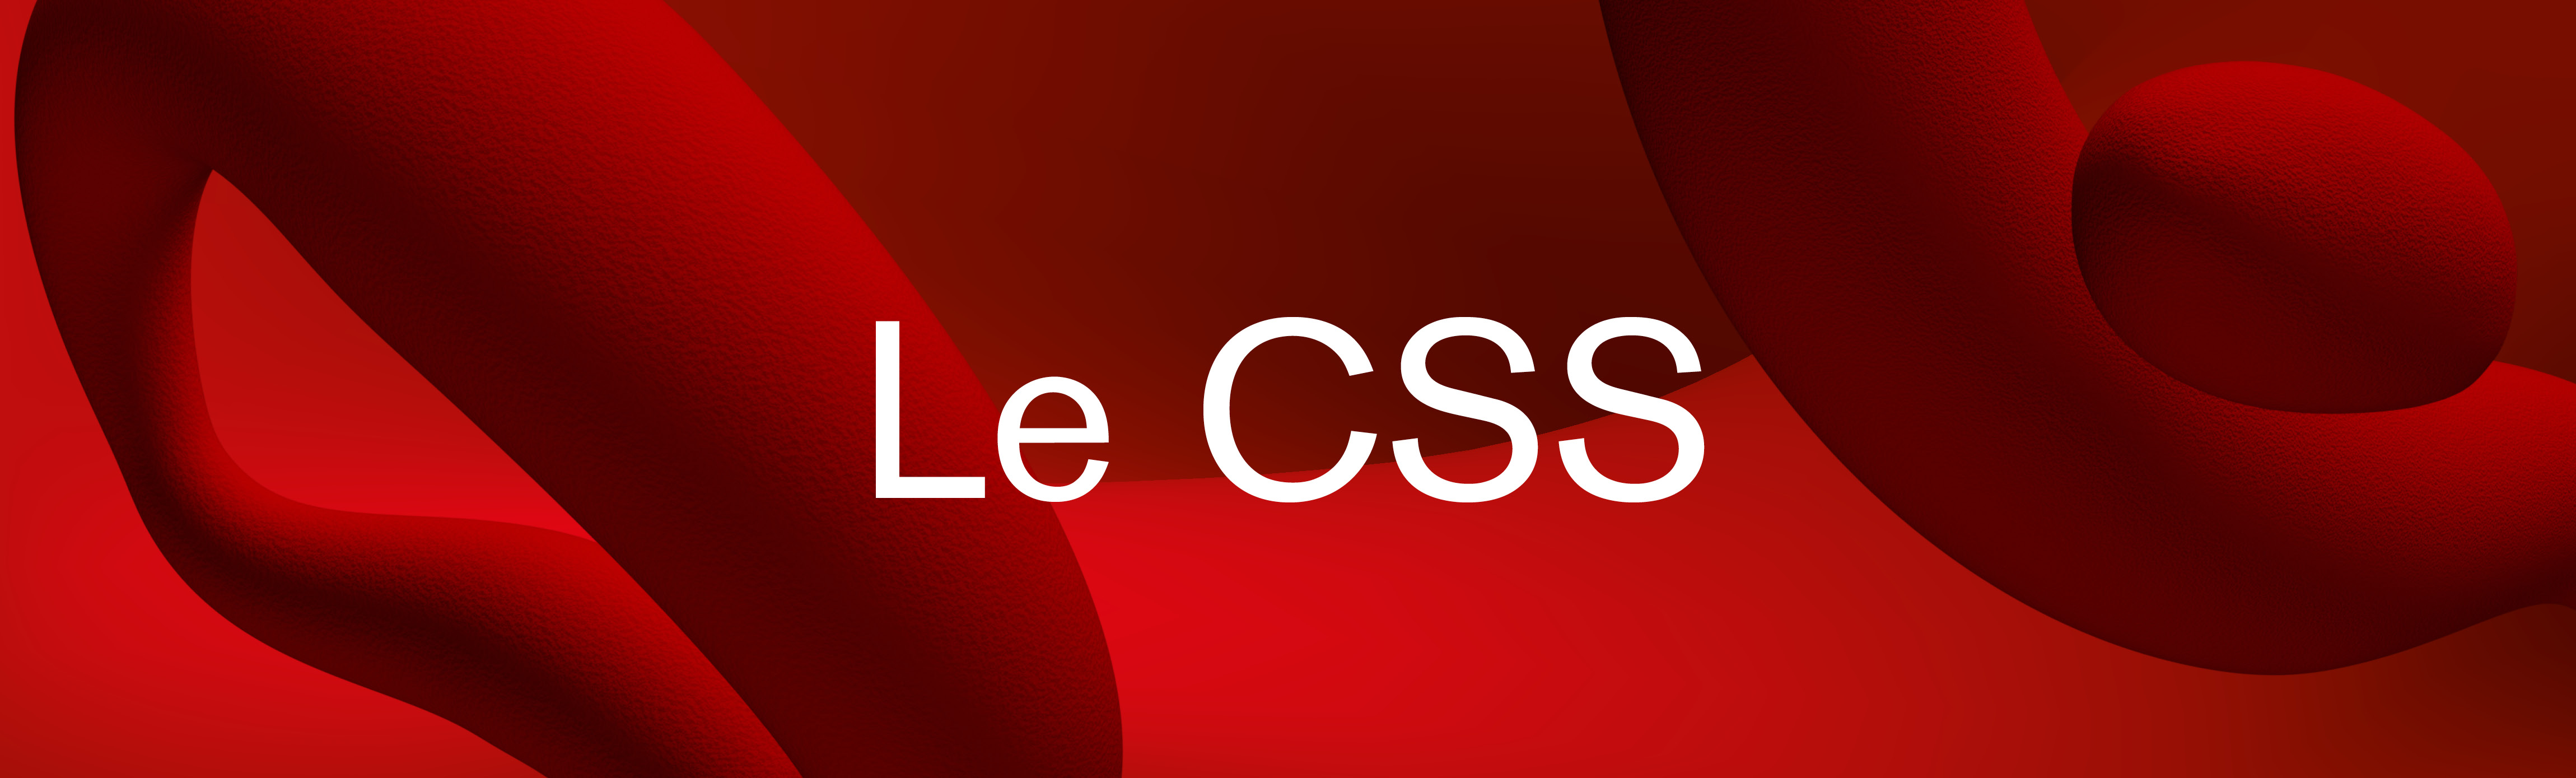 Le CSS